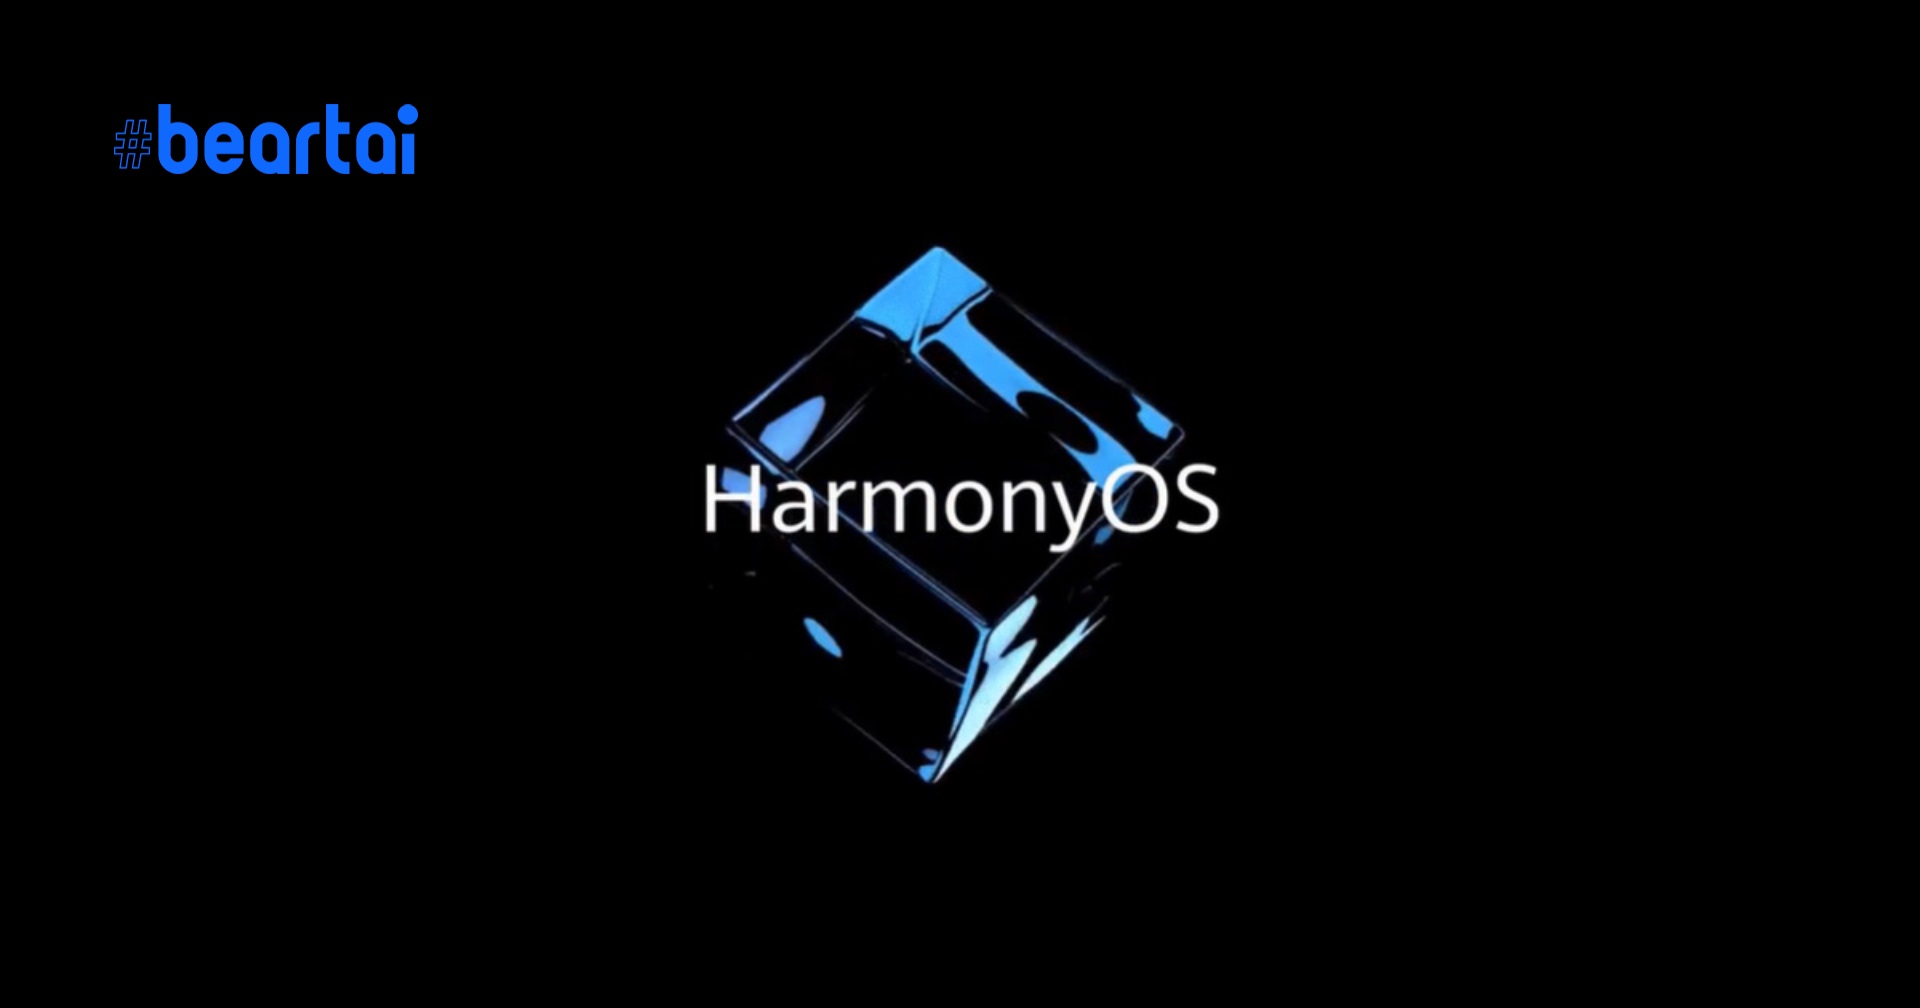 Huawei ประกาศกว่า 40 แบรนด์พร้อมอุปกรณ์กว่า 100 ล้านเครื่องจะหันมาใช้ HarmonyOS